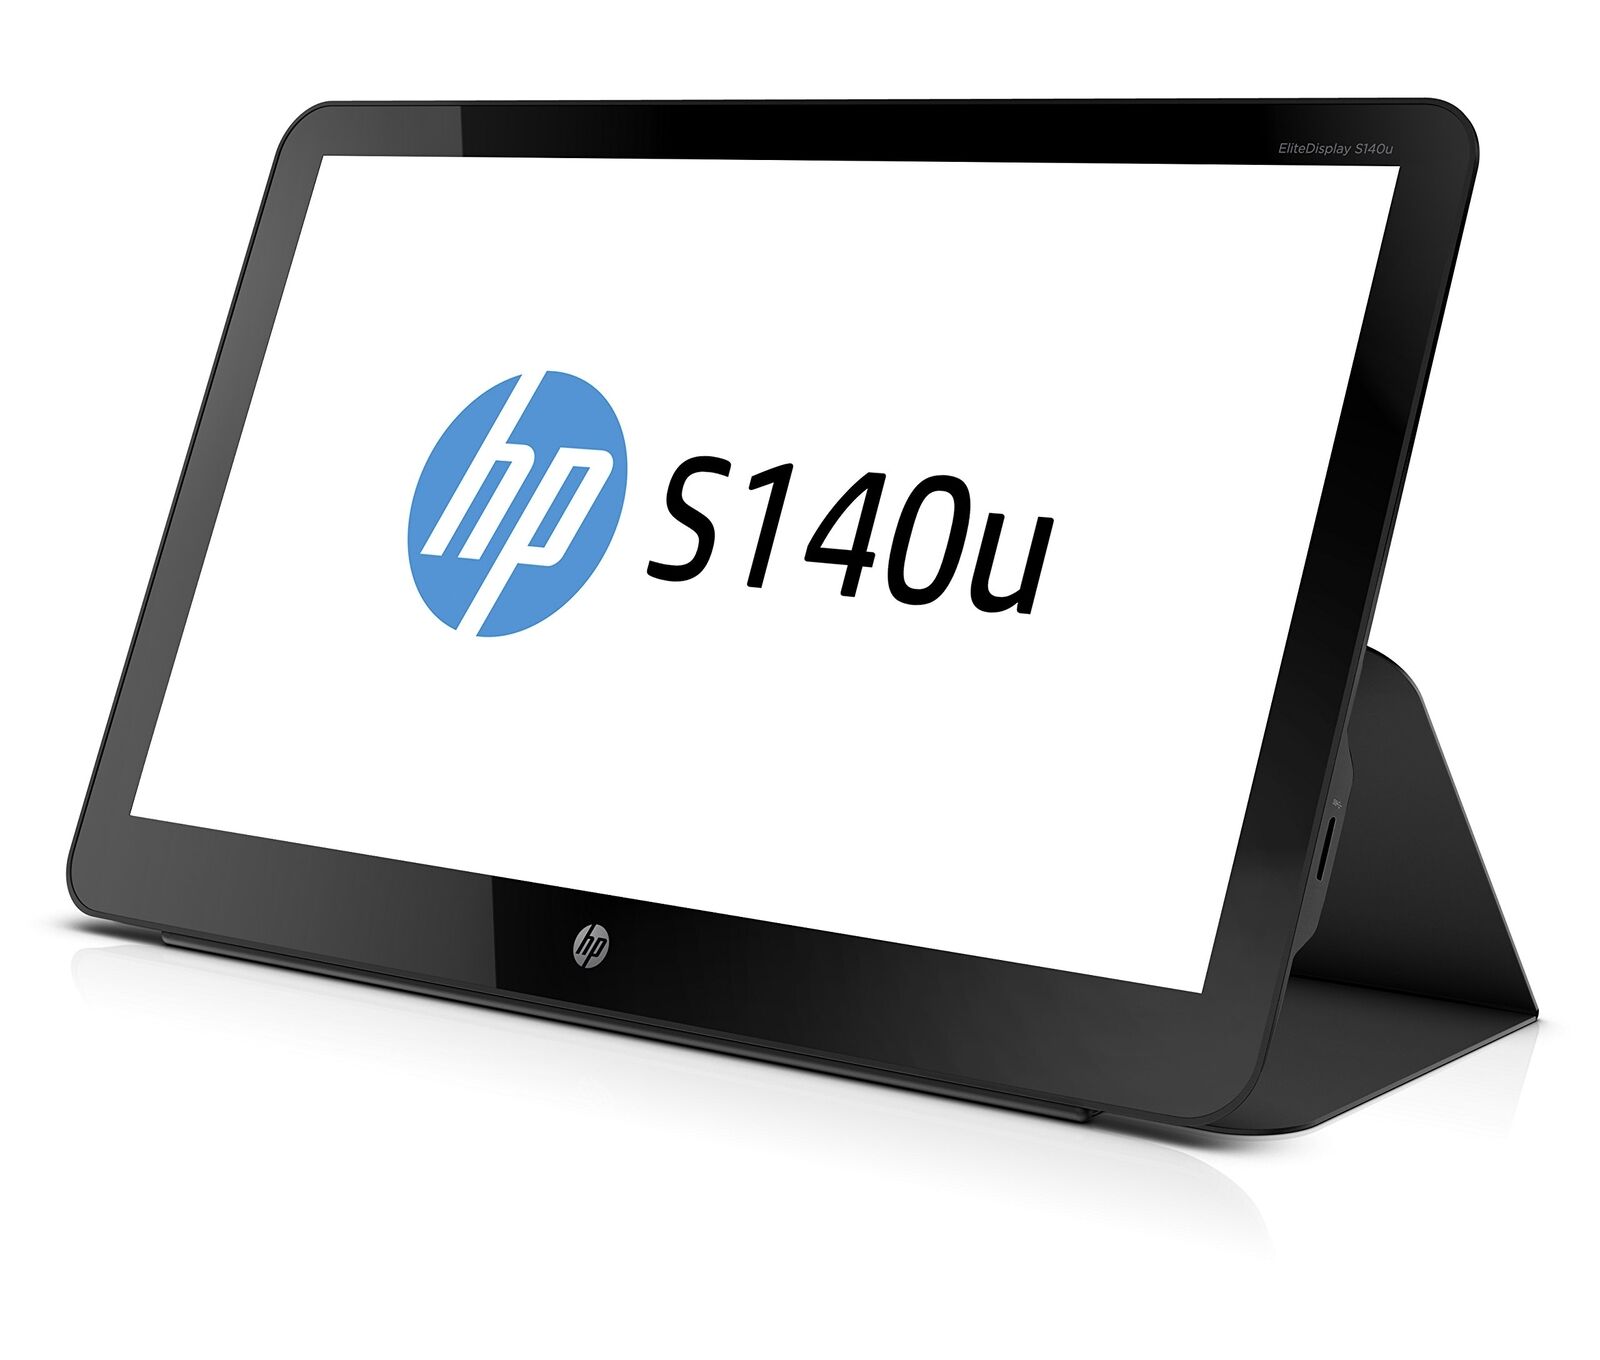 HP ELiteDisplay G8R65A8#ABA 14-Inch Screen LED-Lit Monitor Used Grade A